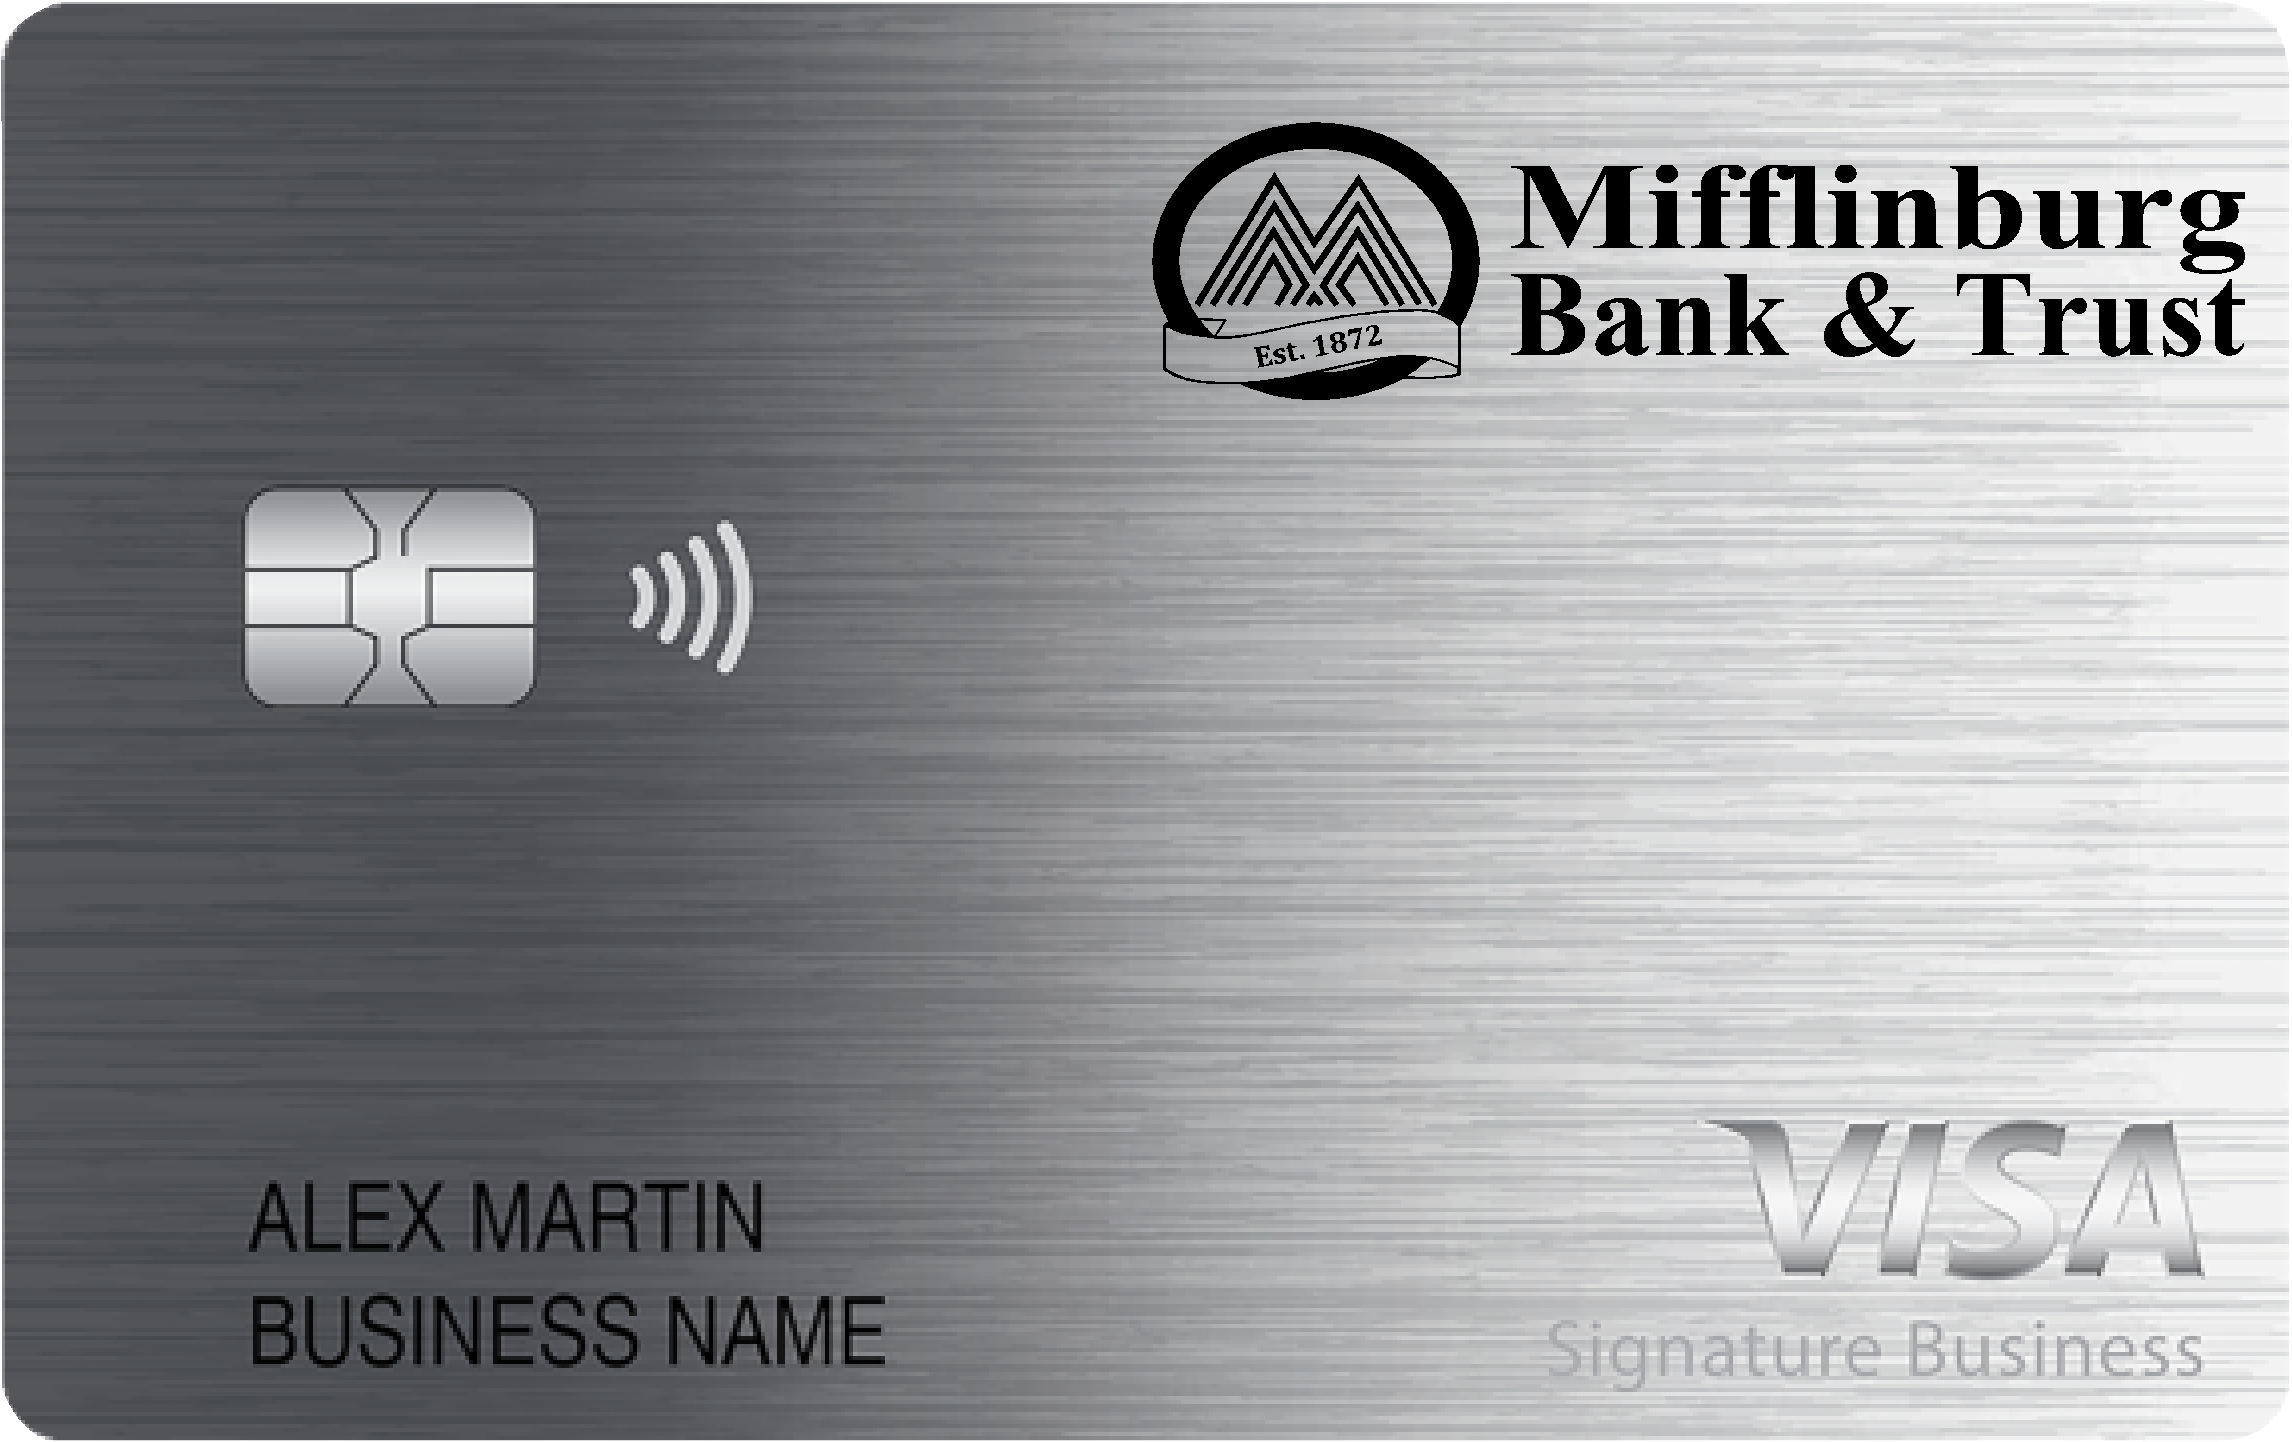 Mifflinburg Bank & Trust Smart Business Rewards Card